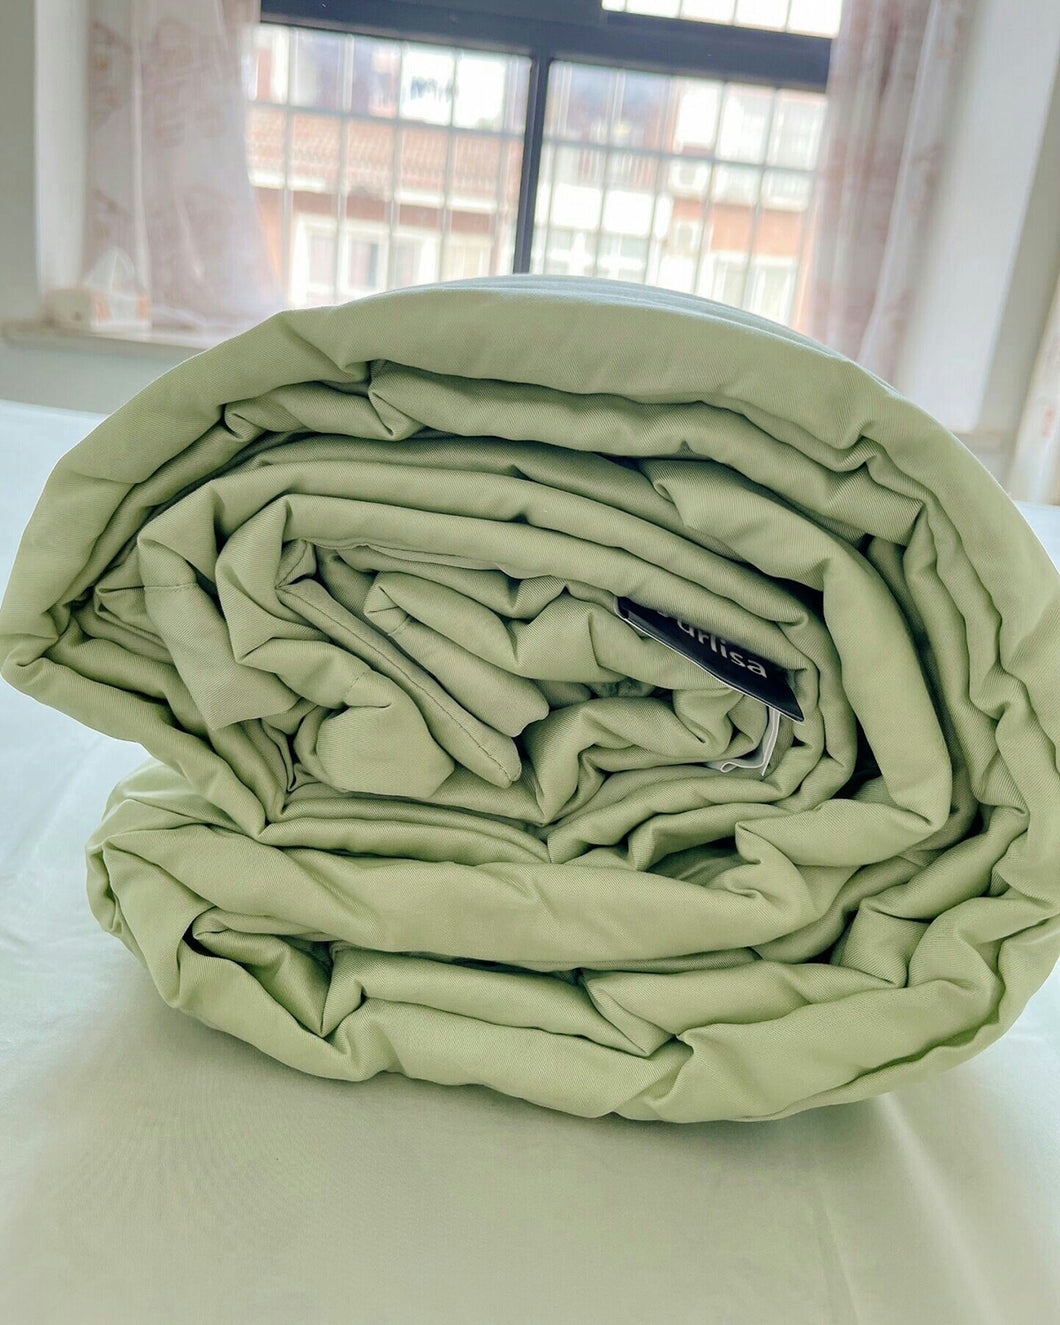 yurlisa Quilt,Knit Blanket King Size Summer Lightweight Soft Breathable Cozy